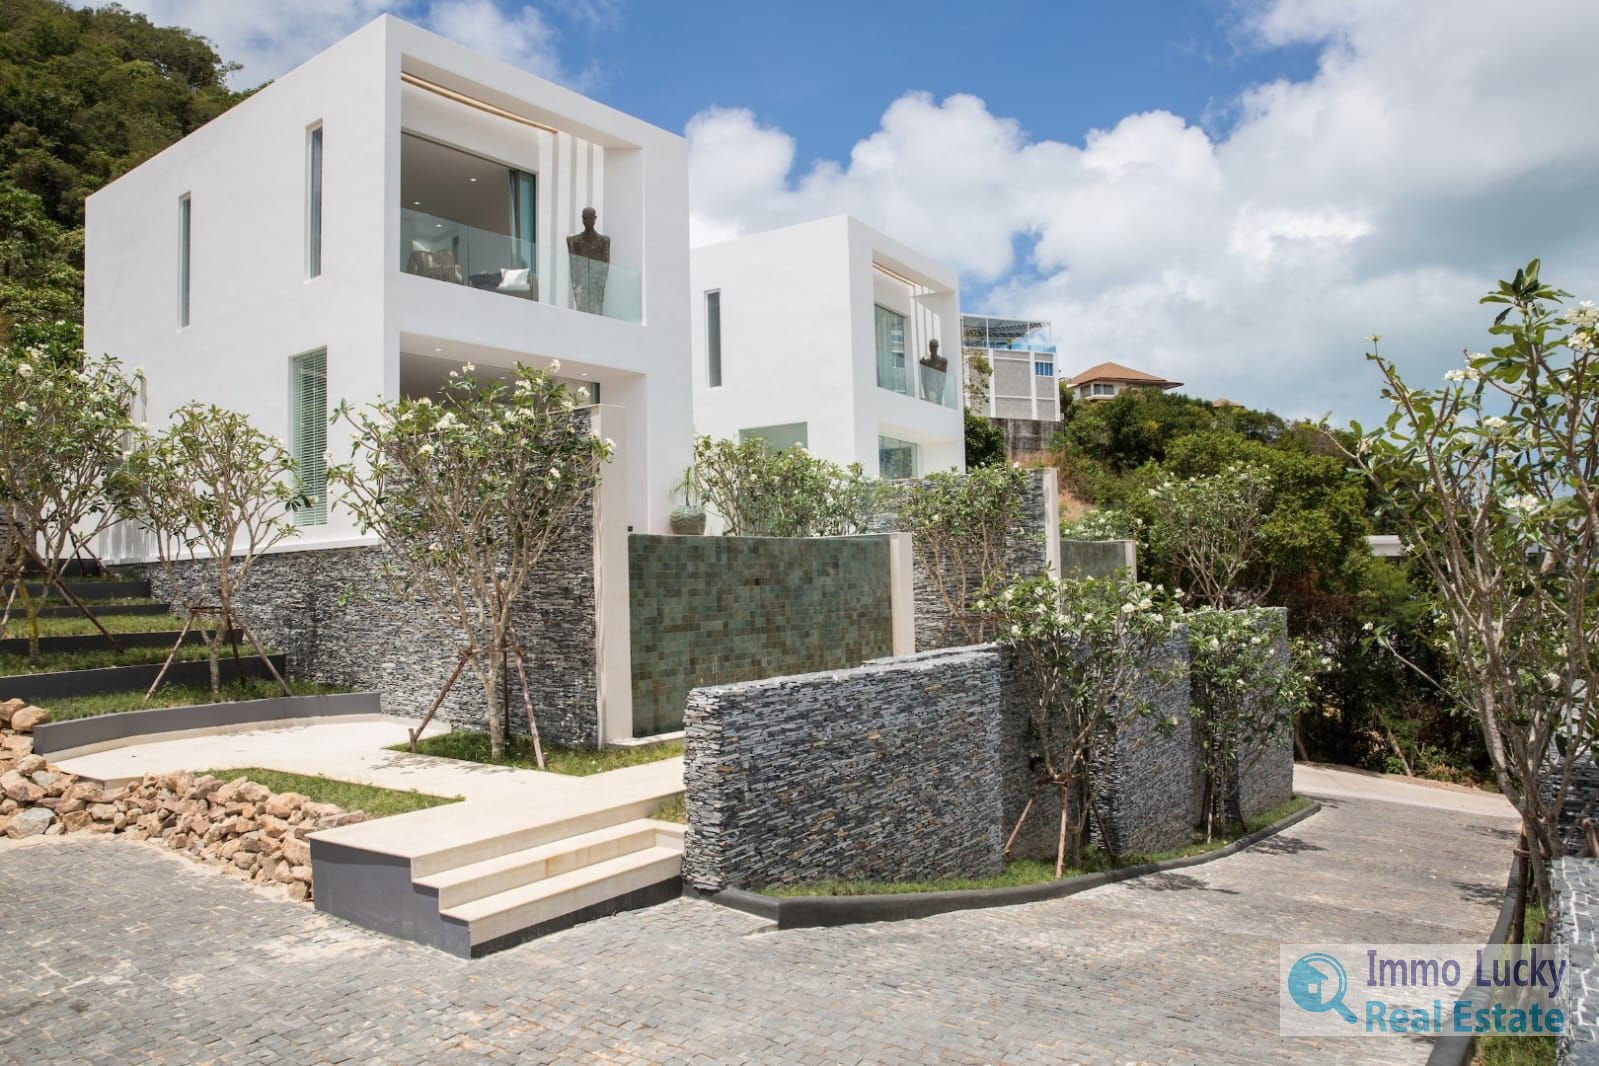 A vendre villa neuve à Plai Leam – 2 chambres – piscine – vue mer